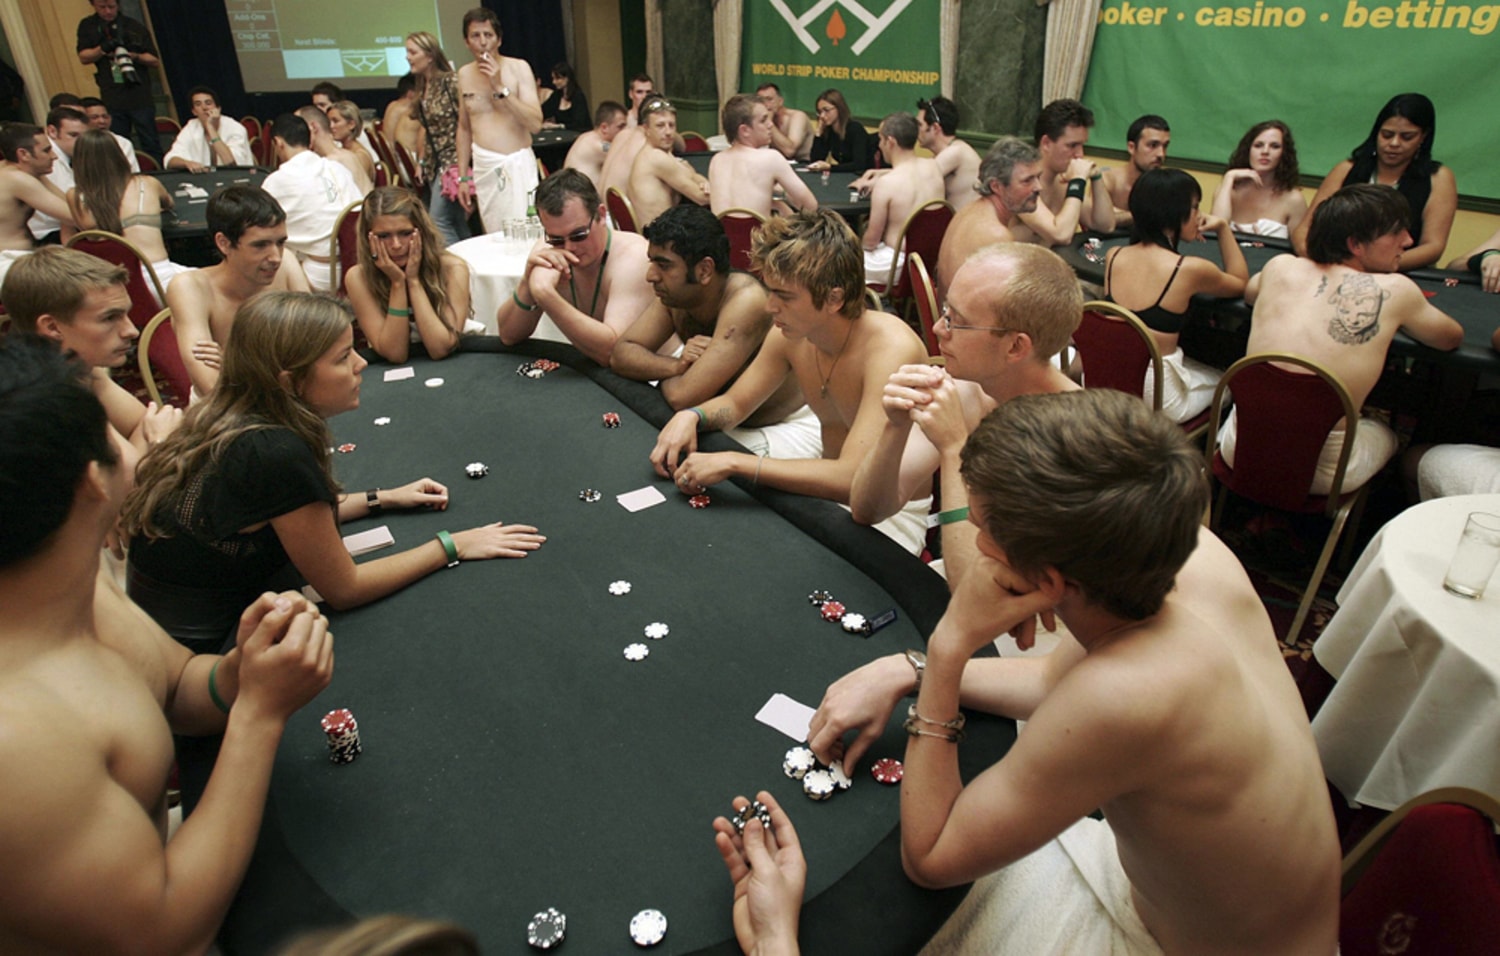 Strip poker championships bring mass a-peel